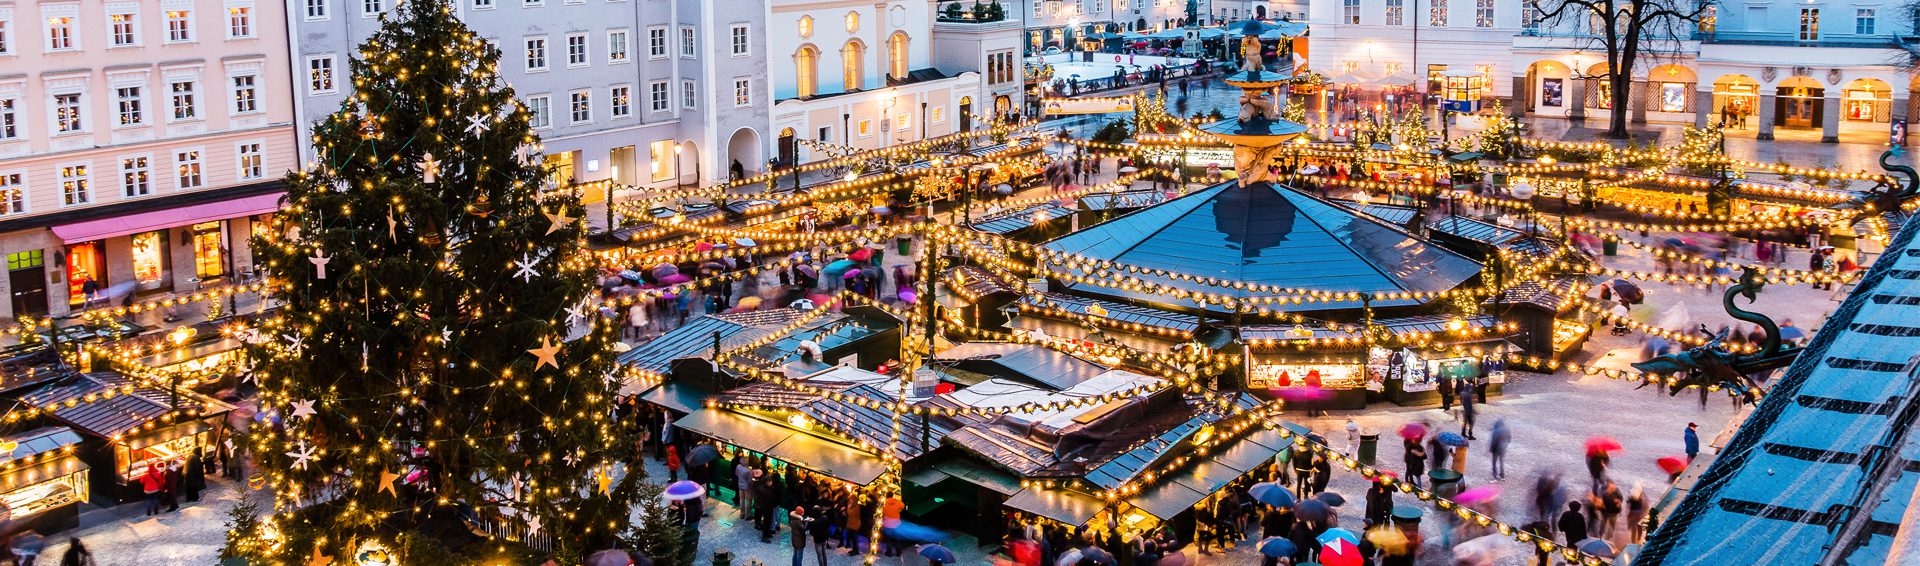 Highlights of Christmas Markets: Munich to Vienna